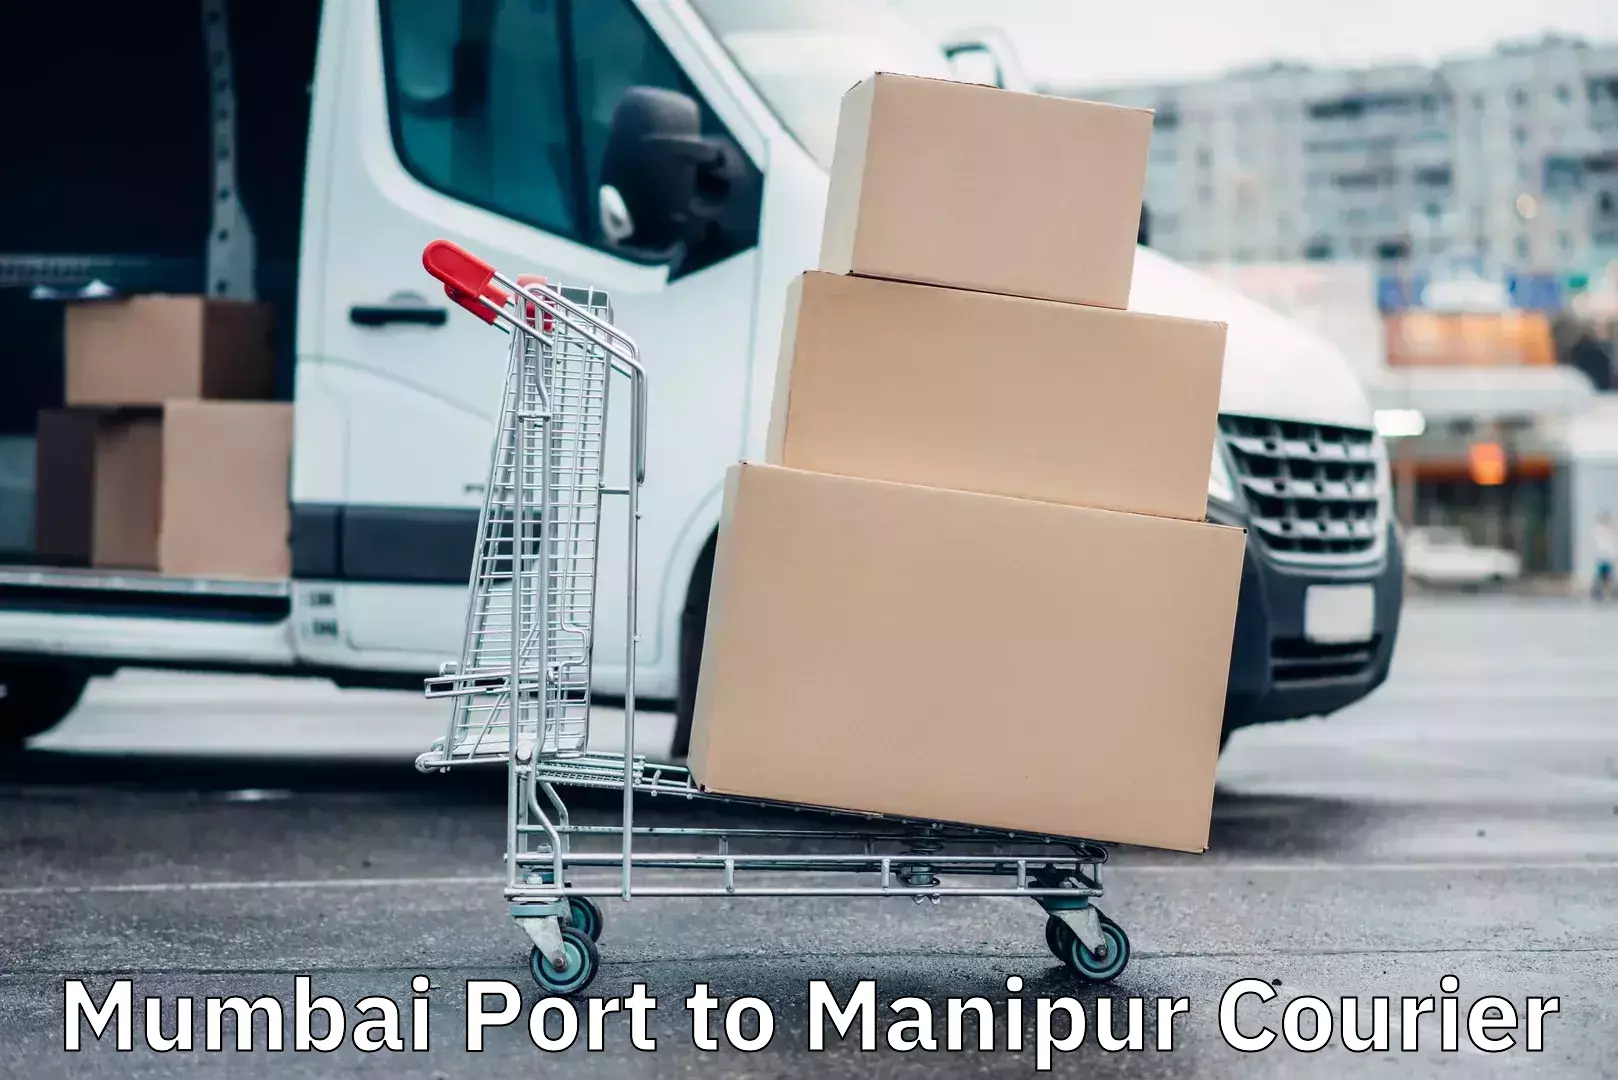 Cash on delivery service Mumbai Port to Churachandpur